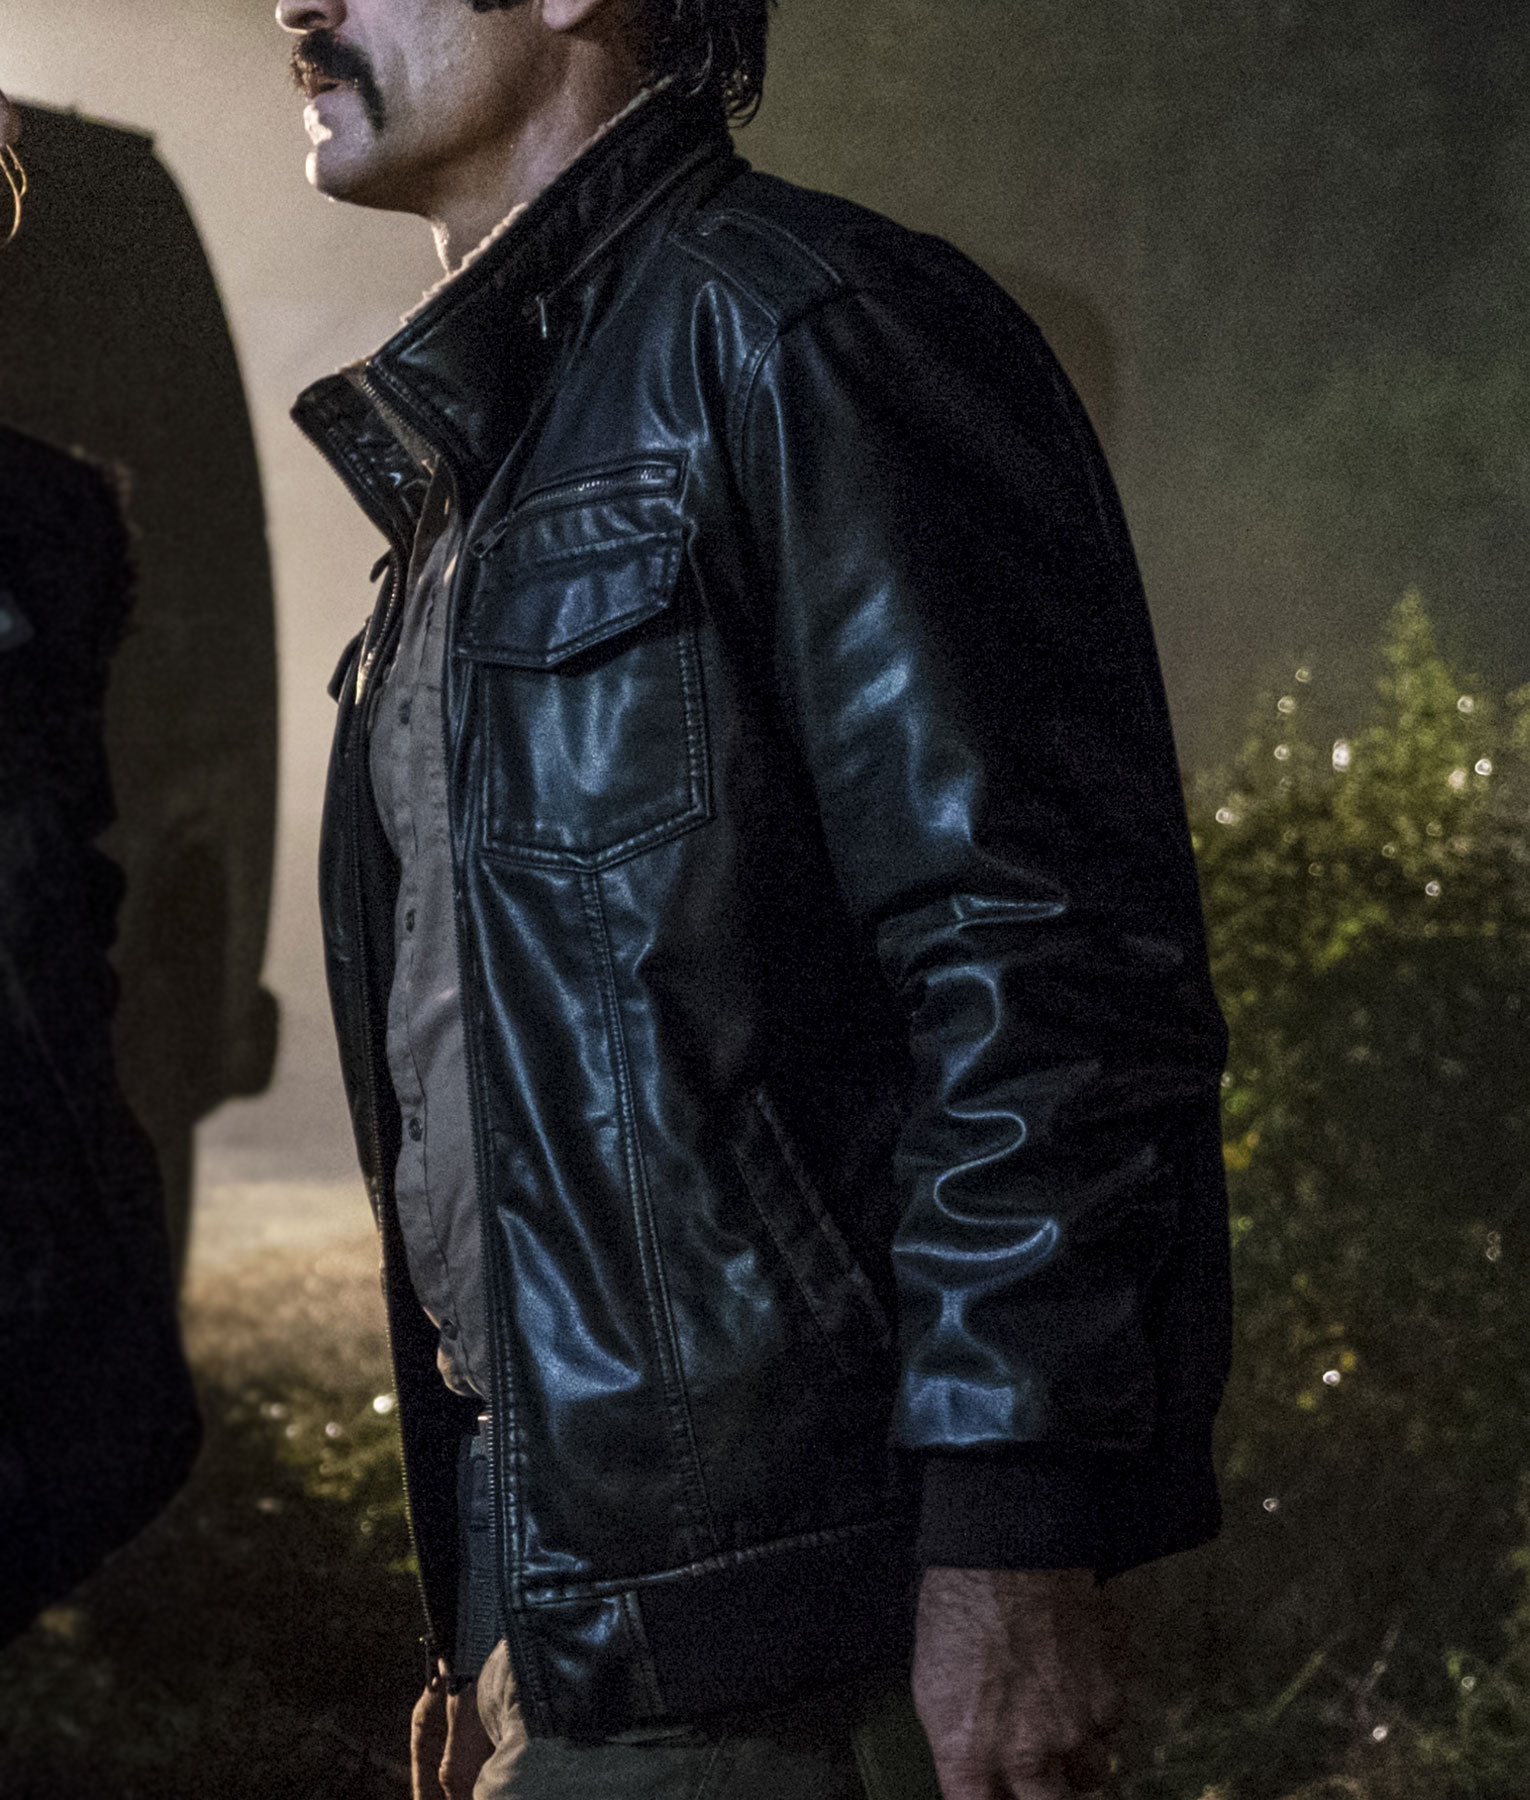 Steven Ogg The Walking Dead Black Leather Jacket (3)